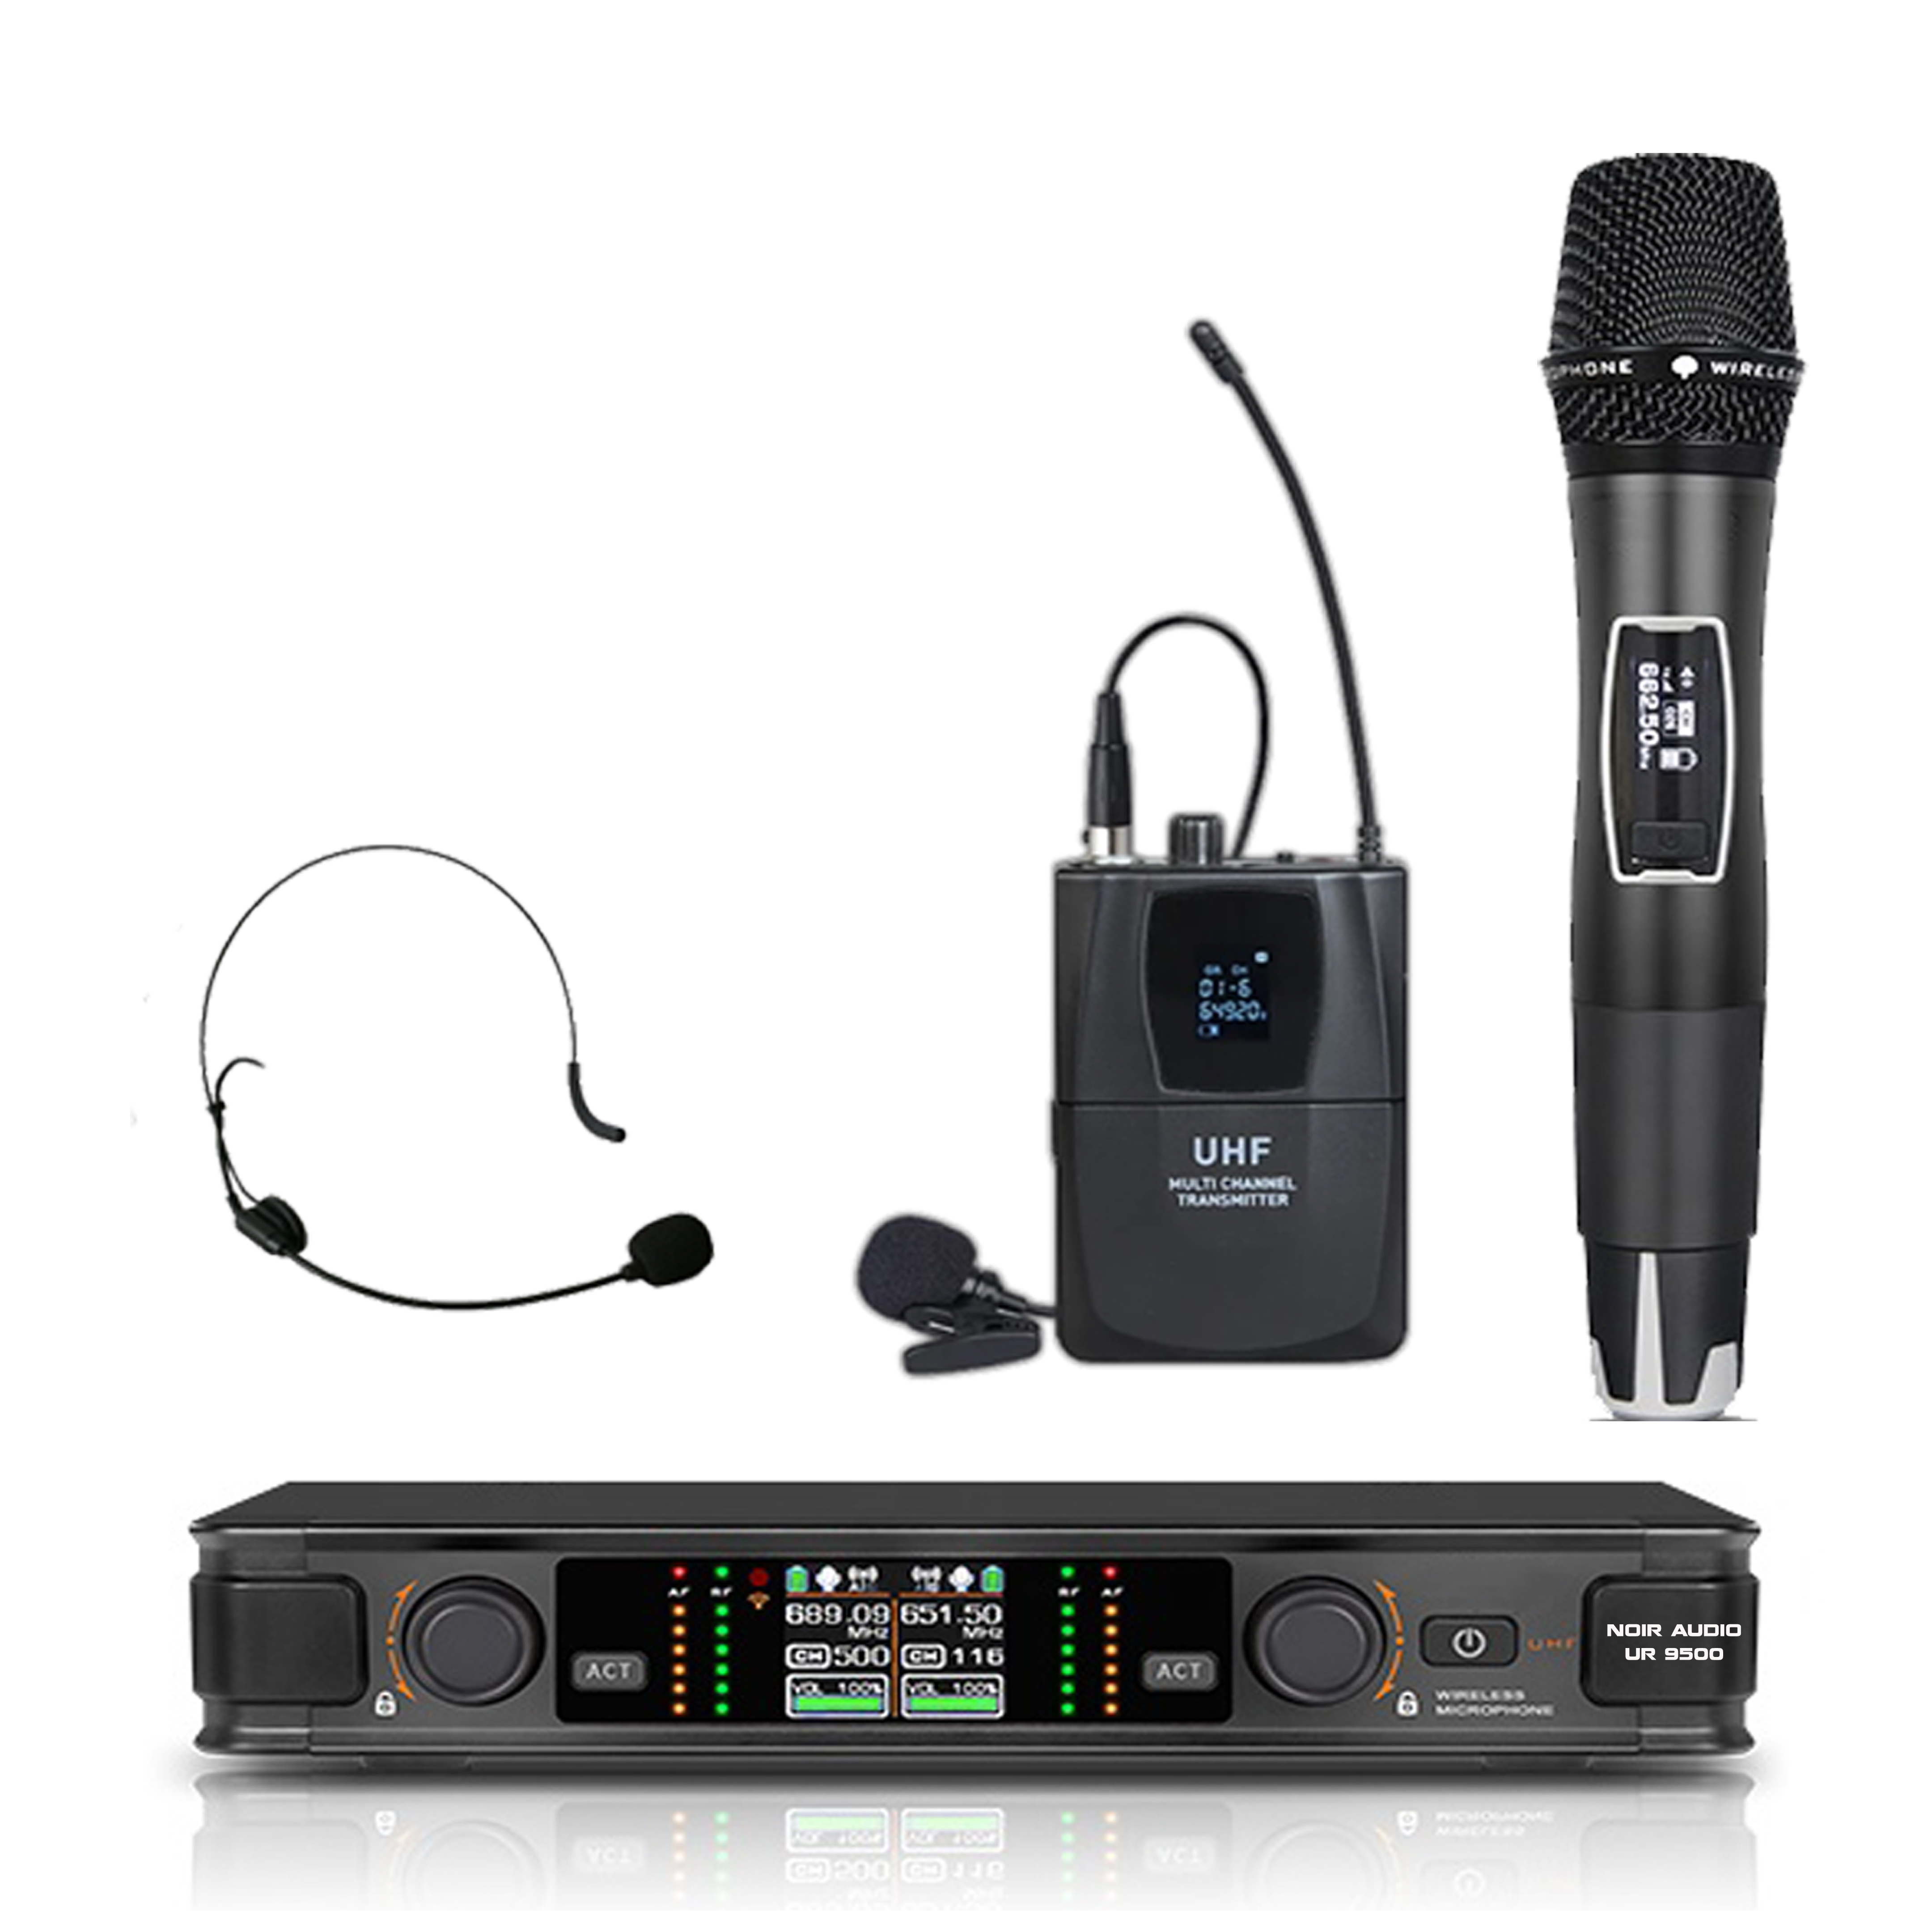 NOIR-audio UR-9500 Handheld/Bodypack